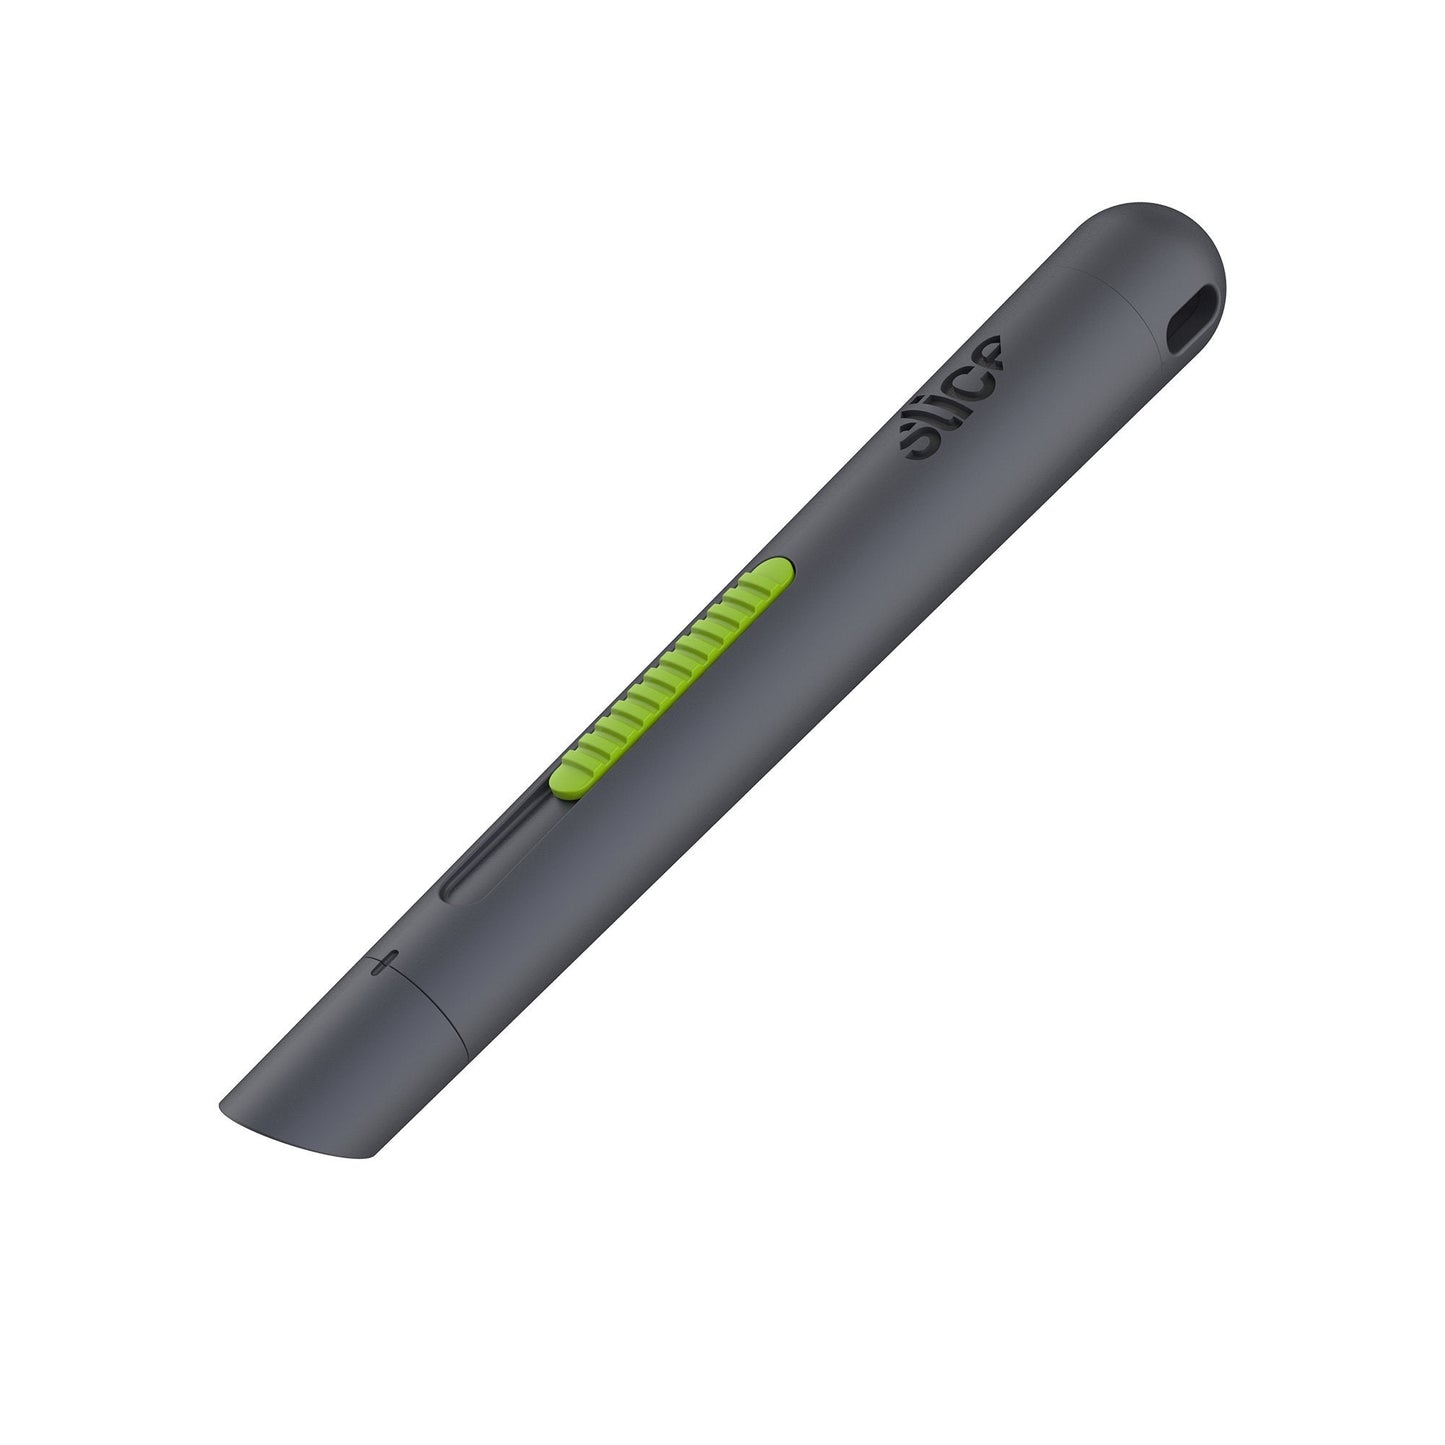 Auto-Retractable Pen Cutter